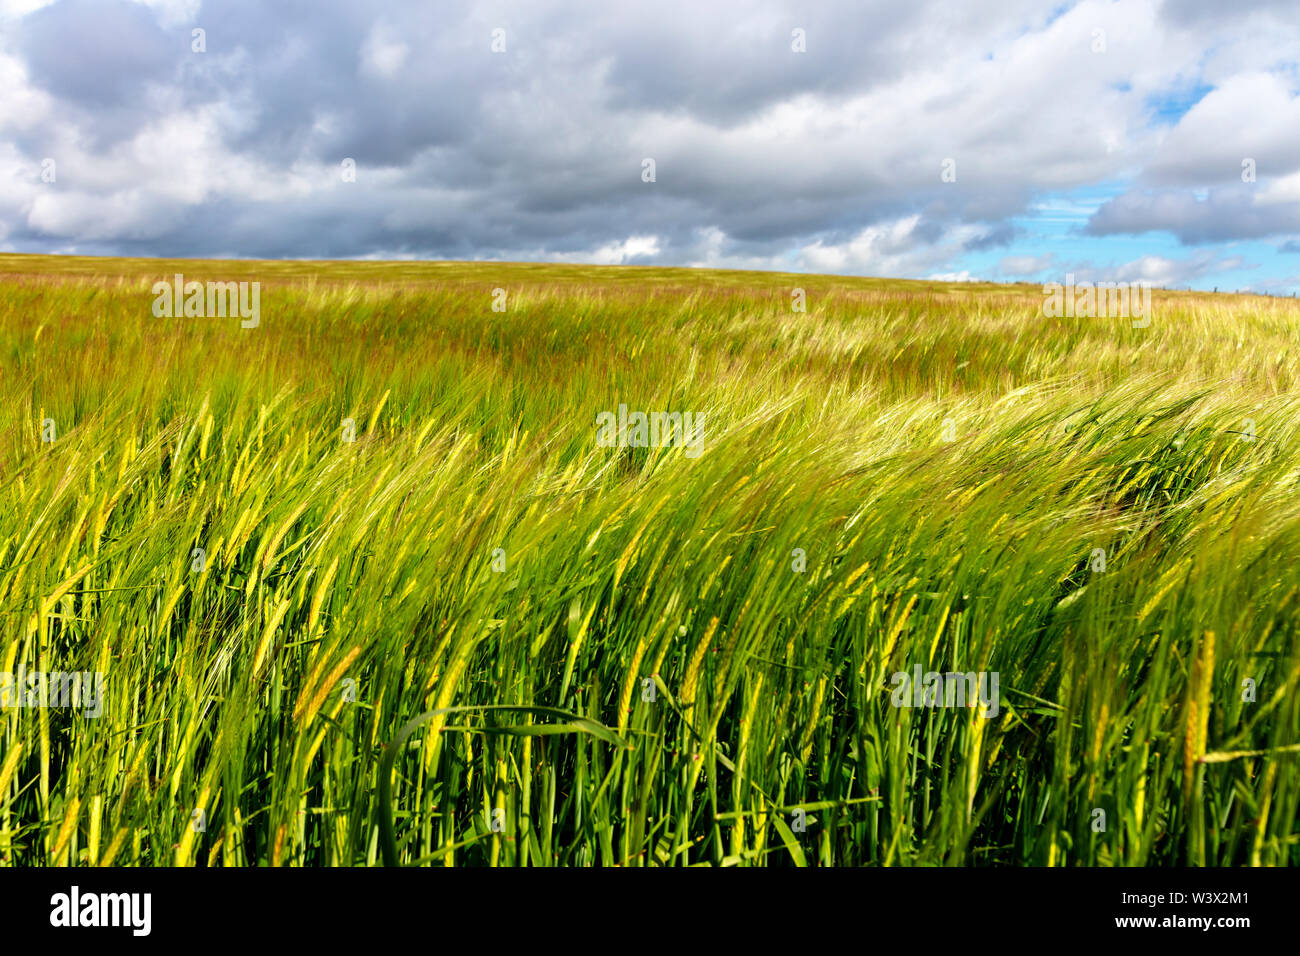 Corn field in the wind near Stonehaven, Aberdeenshire, Scotland, Great Britain Stock Photo